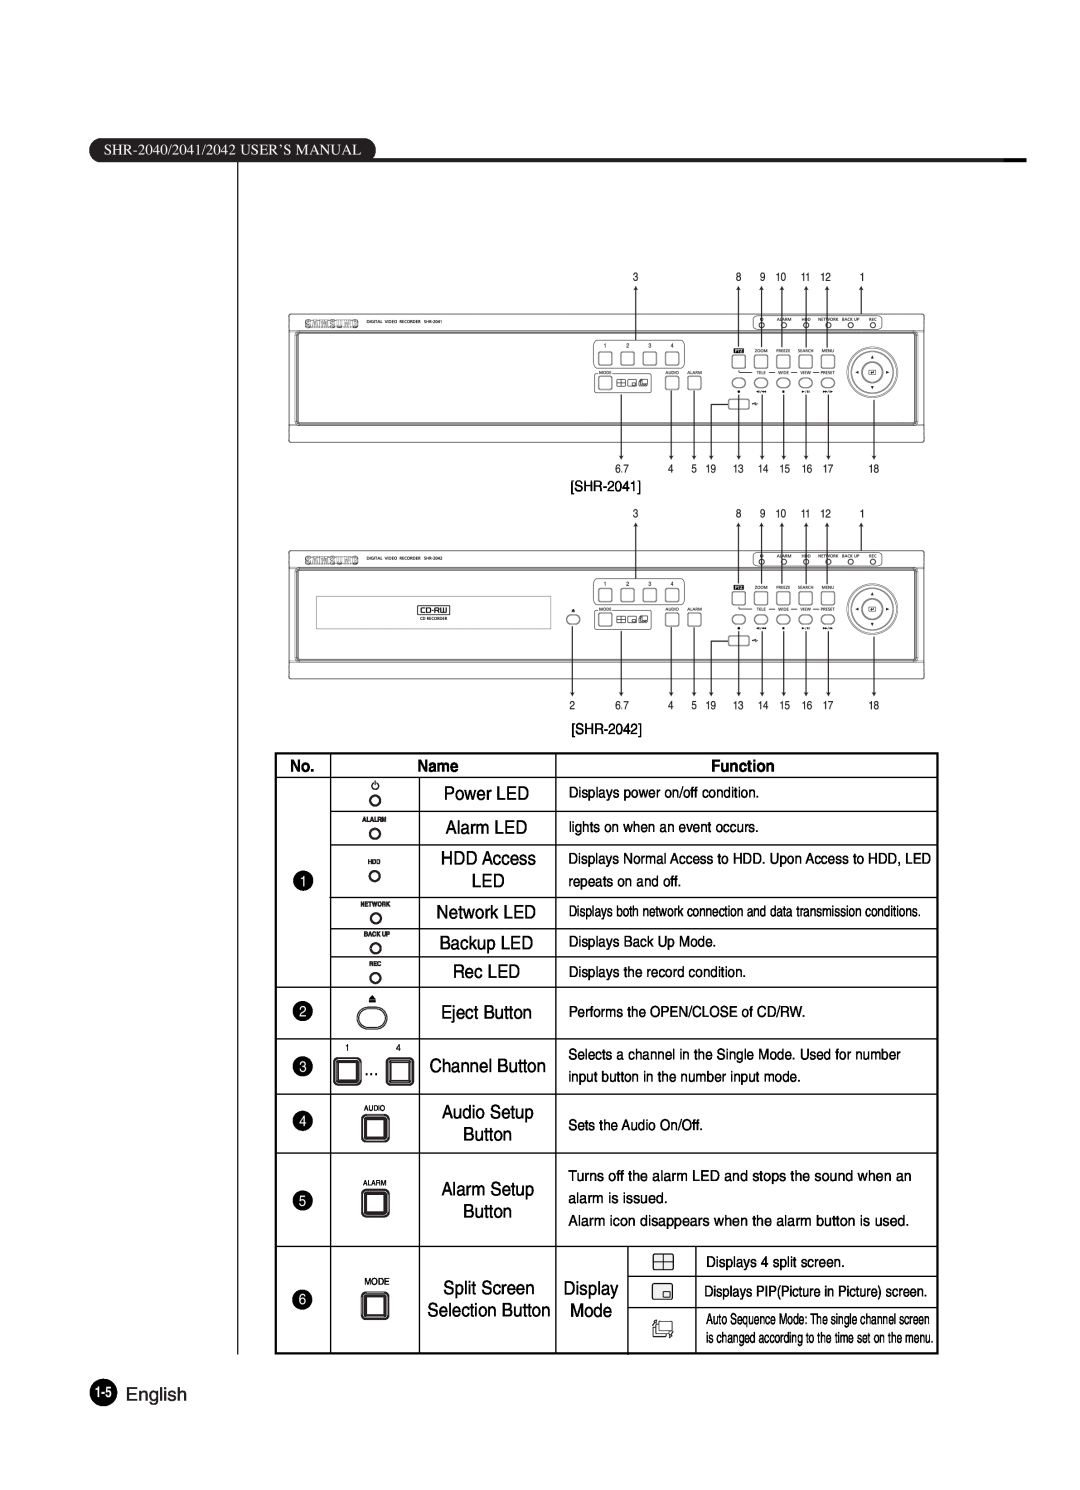 Samsung SHR-2042P250, SHR-2040P250 manual English, Name, Function, SHR-2040/2041/2042 USER’S MANUAL 